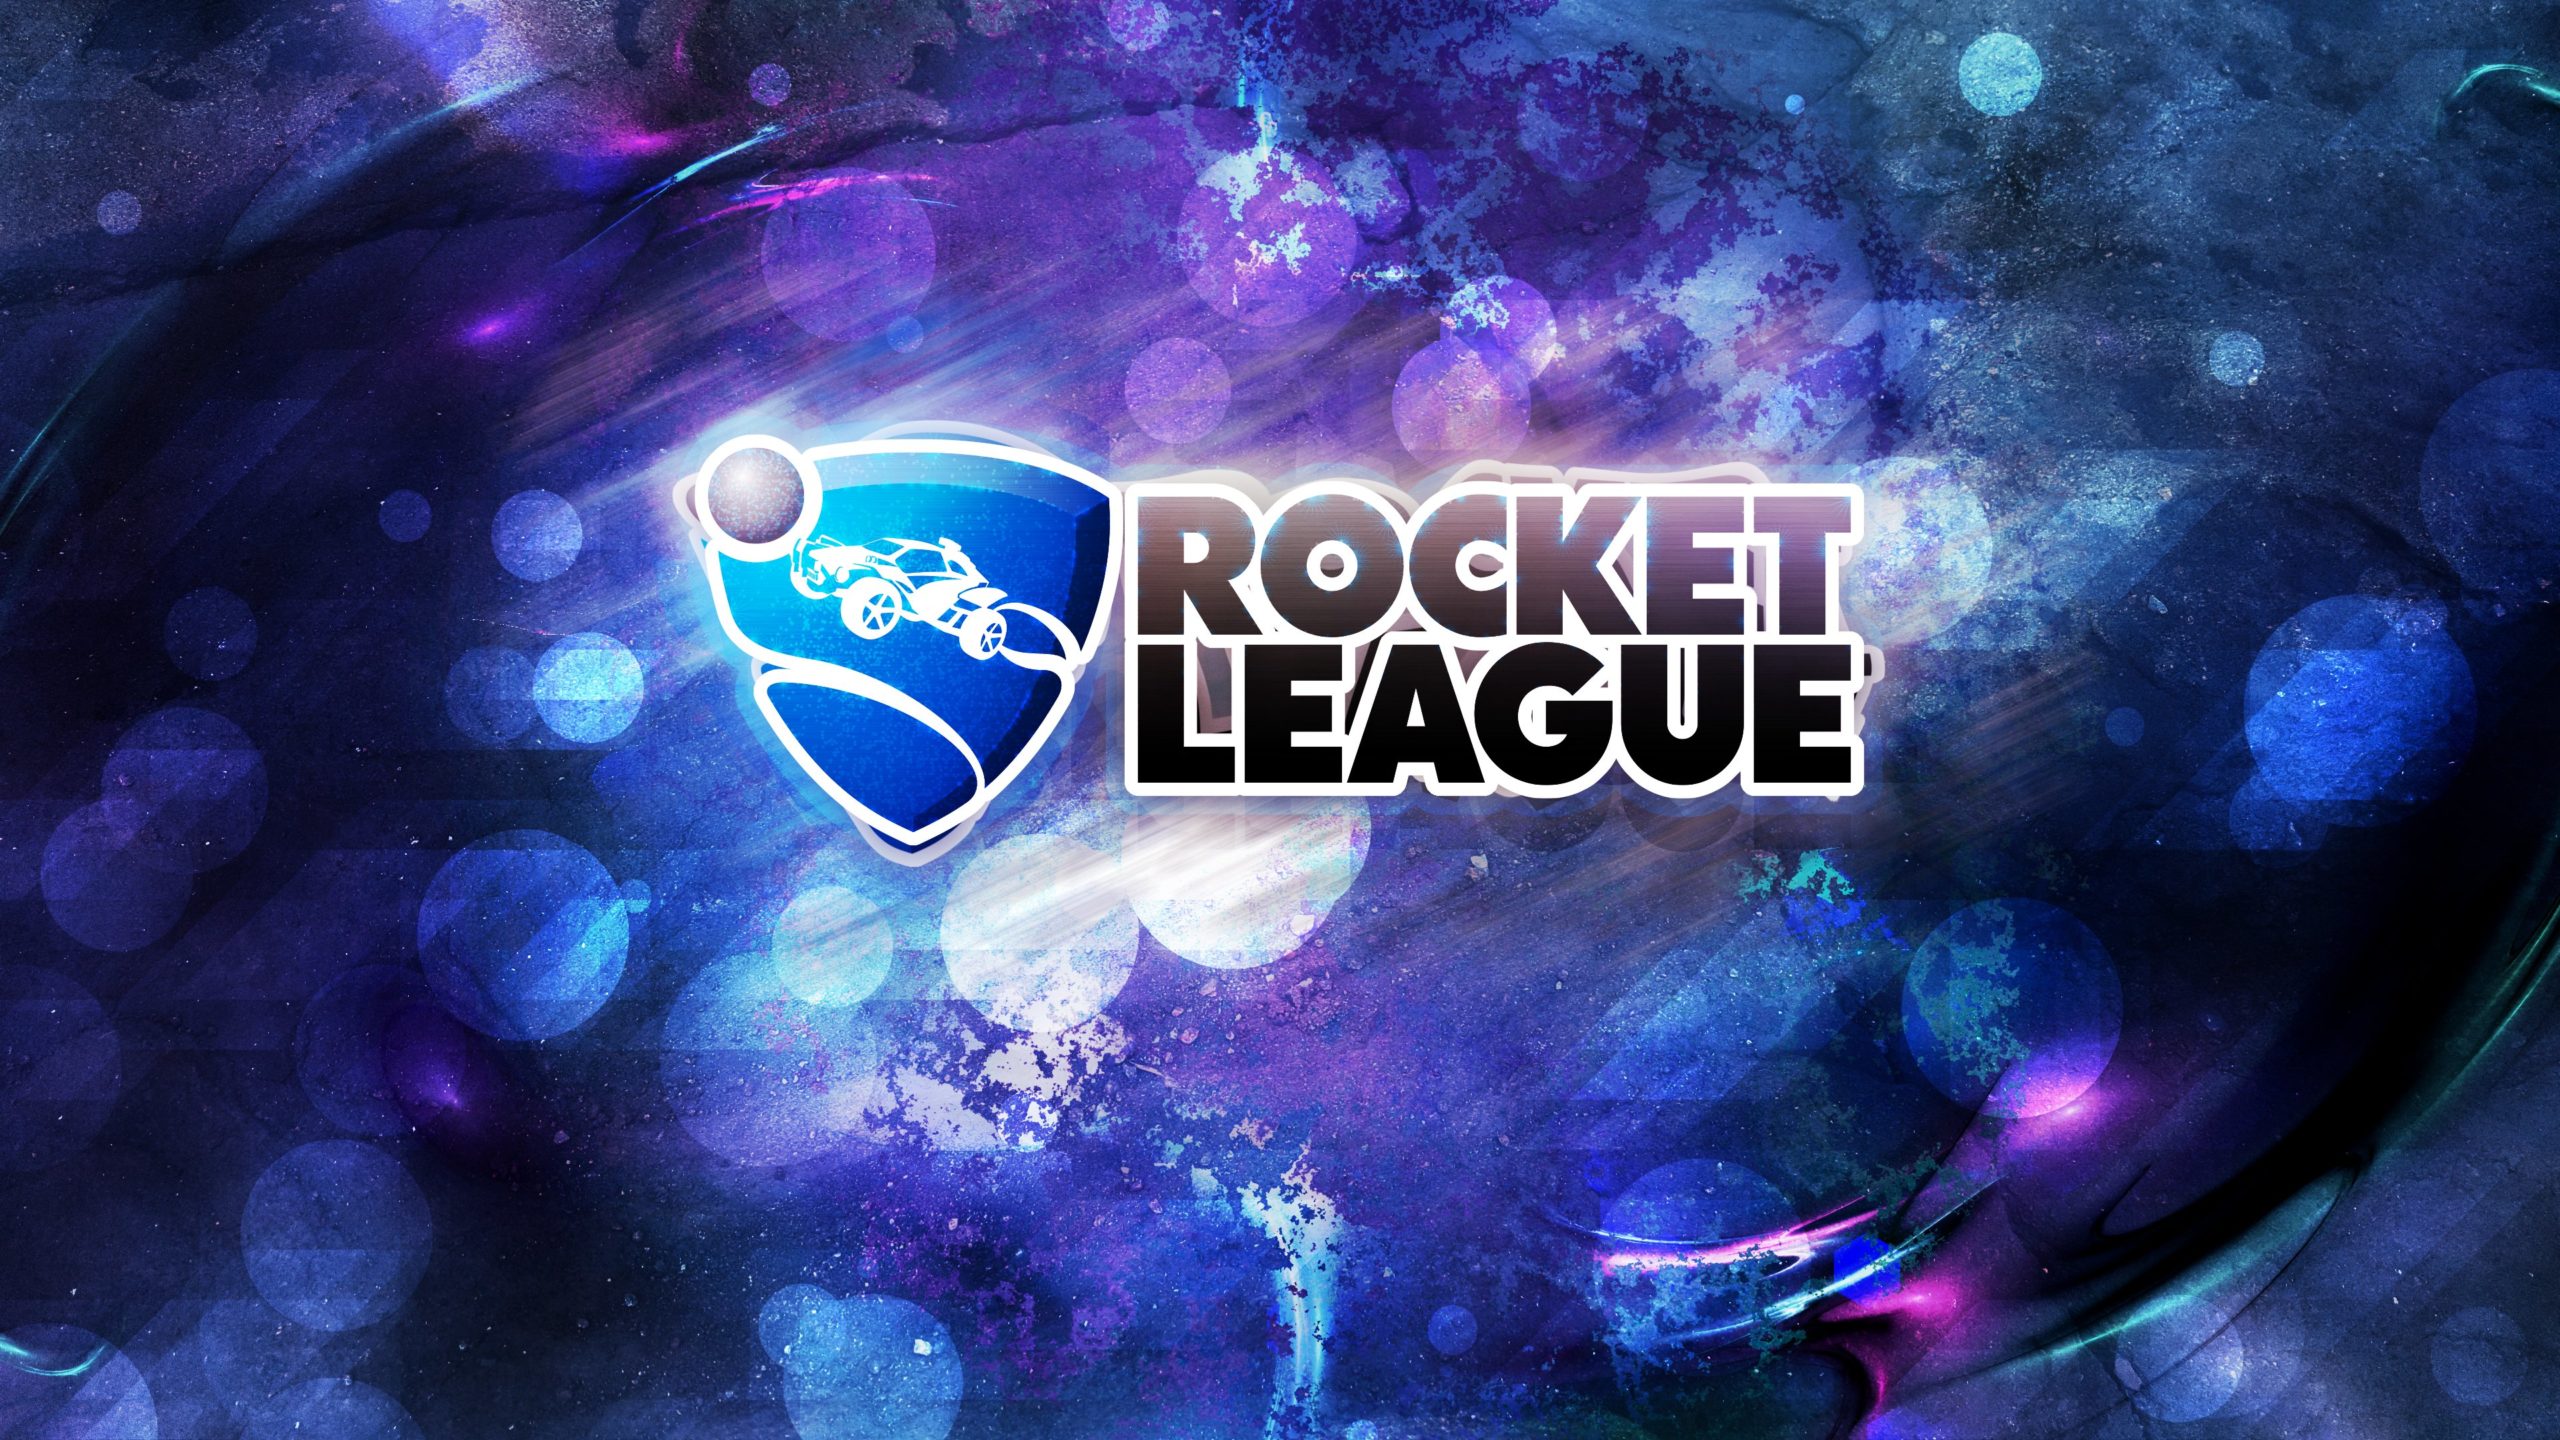 rocket league wallpaper iphone